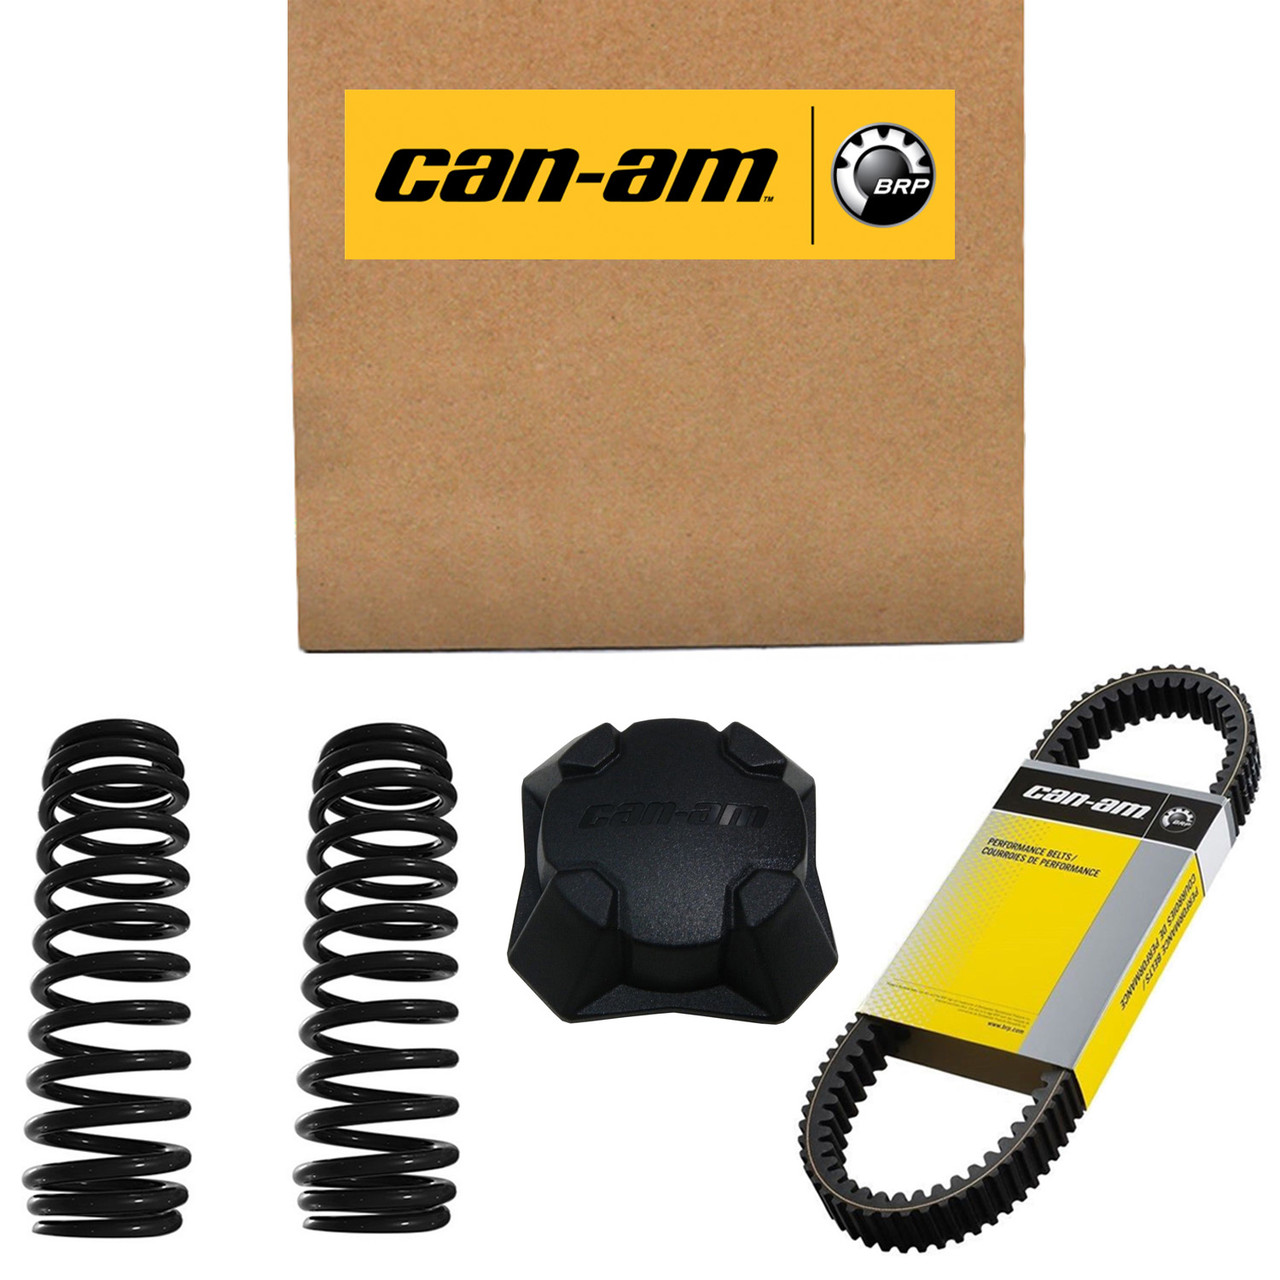 Can-Am New OEM Gear Box, 420686216